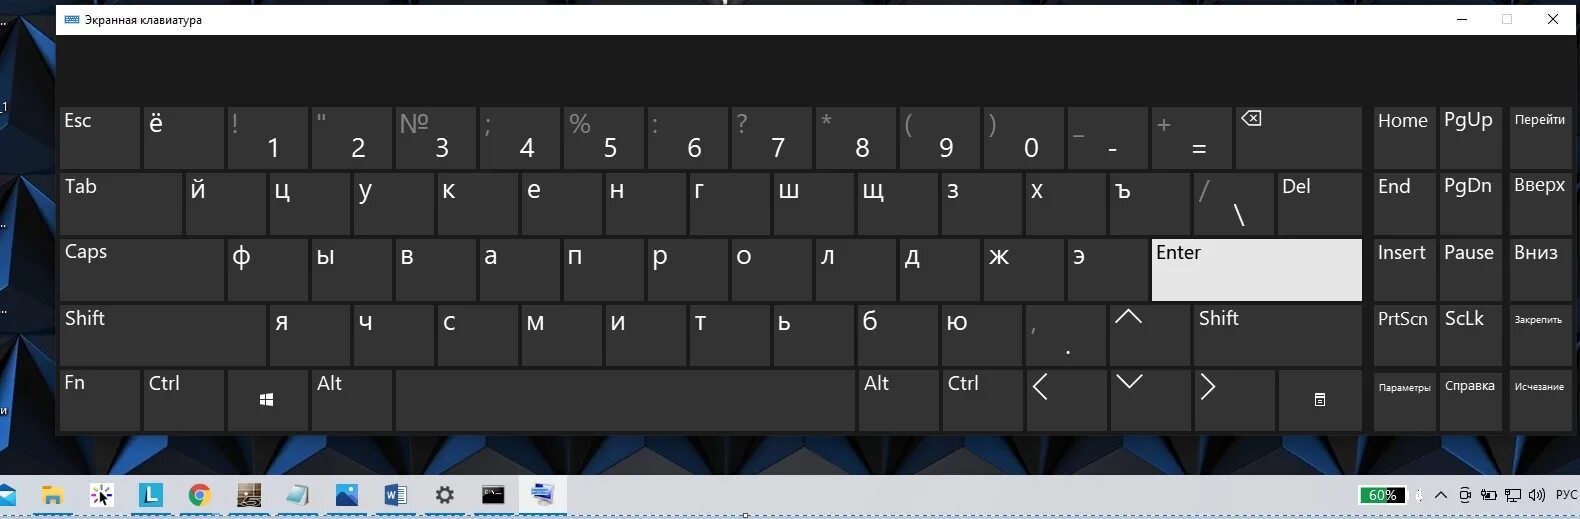 Windows 11 экранная клавиатура. Mag 245 экранная клавиатура. Экранная клавиатура Windows 7. Экранная клавиатура для терминала. Клавиатура компьютера на экране монитора.